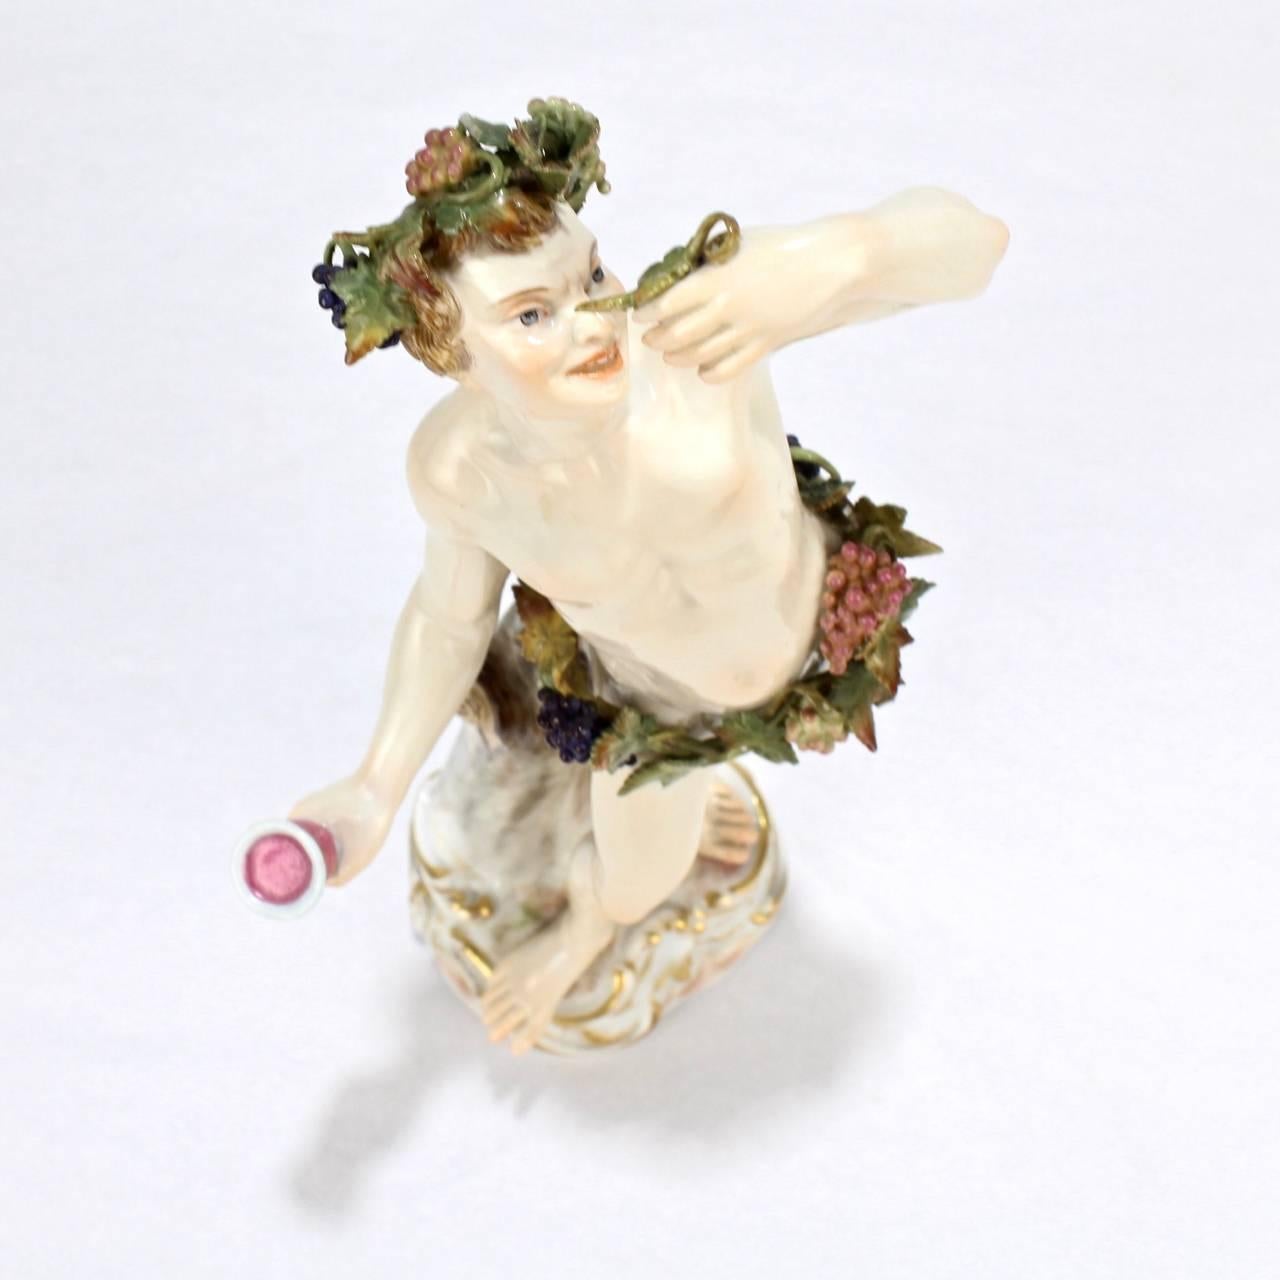 Antique Meissen Porcelain Allegorical Figurine of Bacchus the God of Wine 2